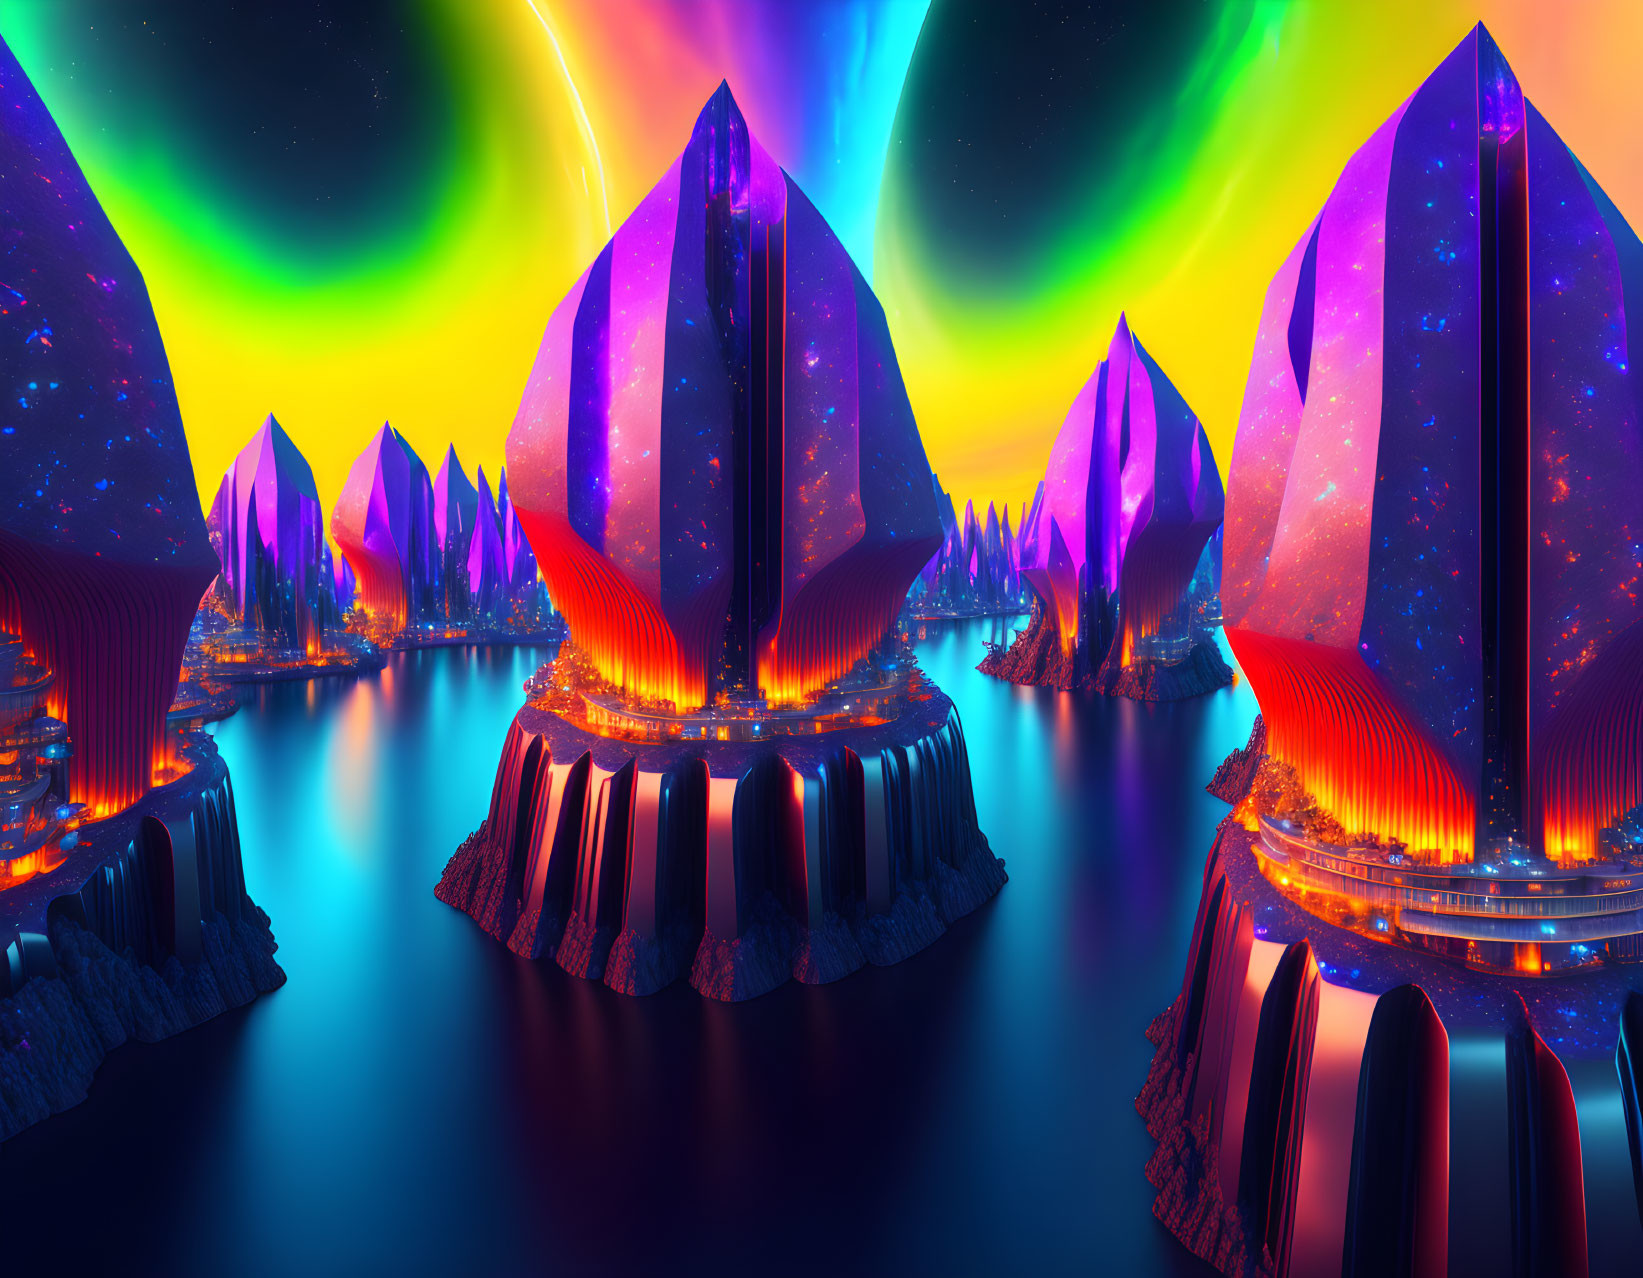 Digital art of alien landscape with neon structures & iridescent auroras